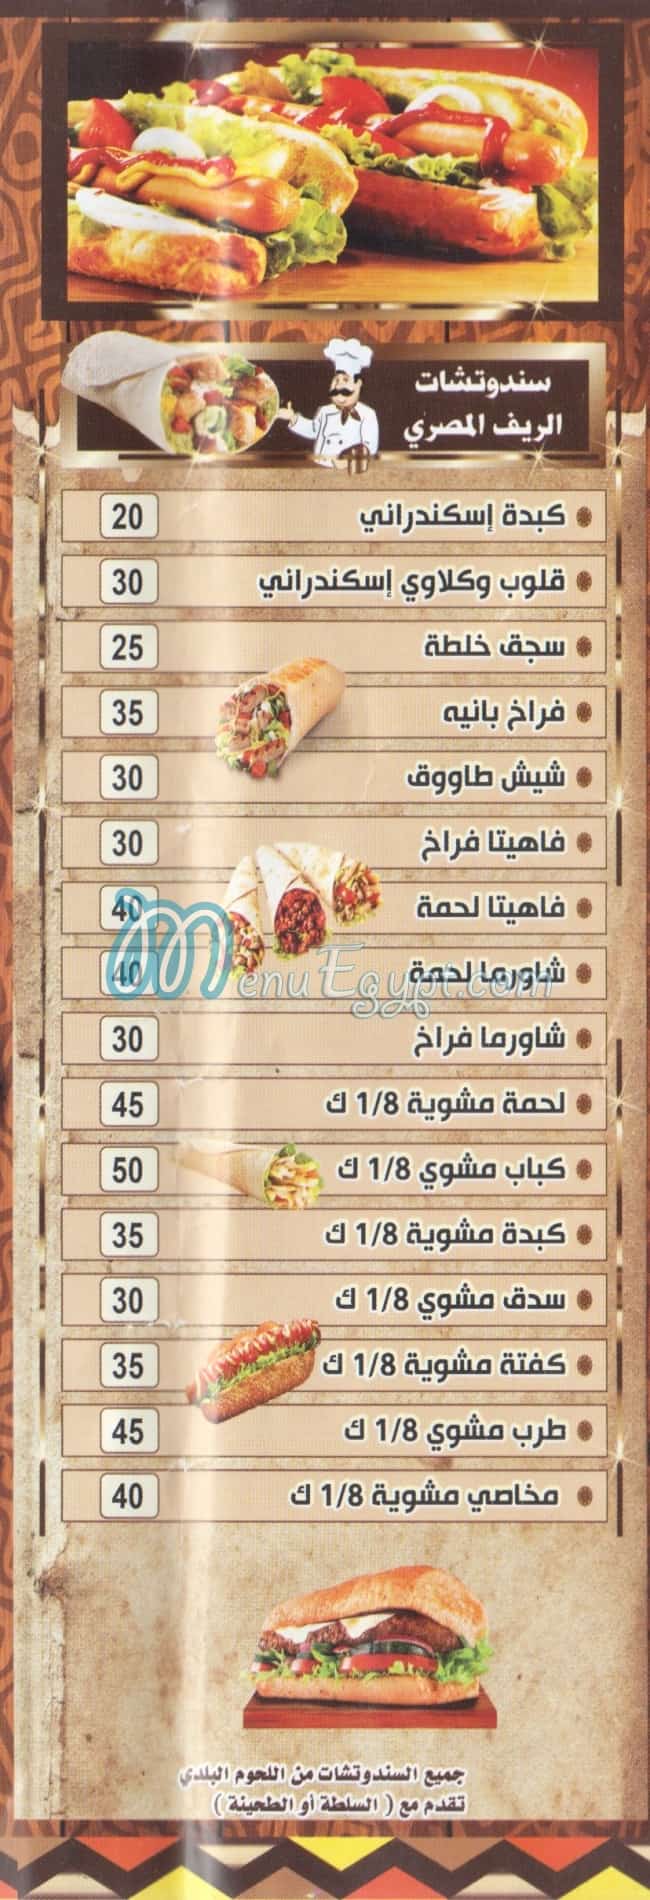 El Ref El Masry menu Egypt 3